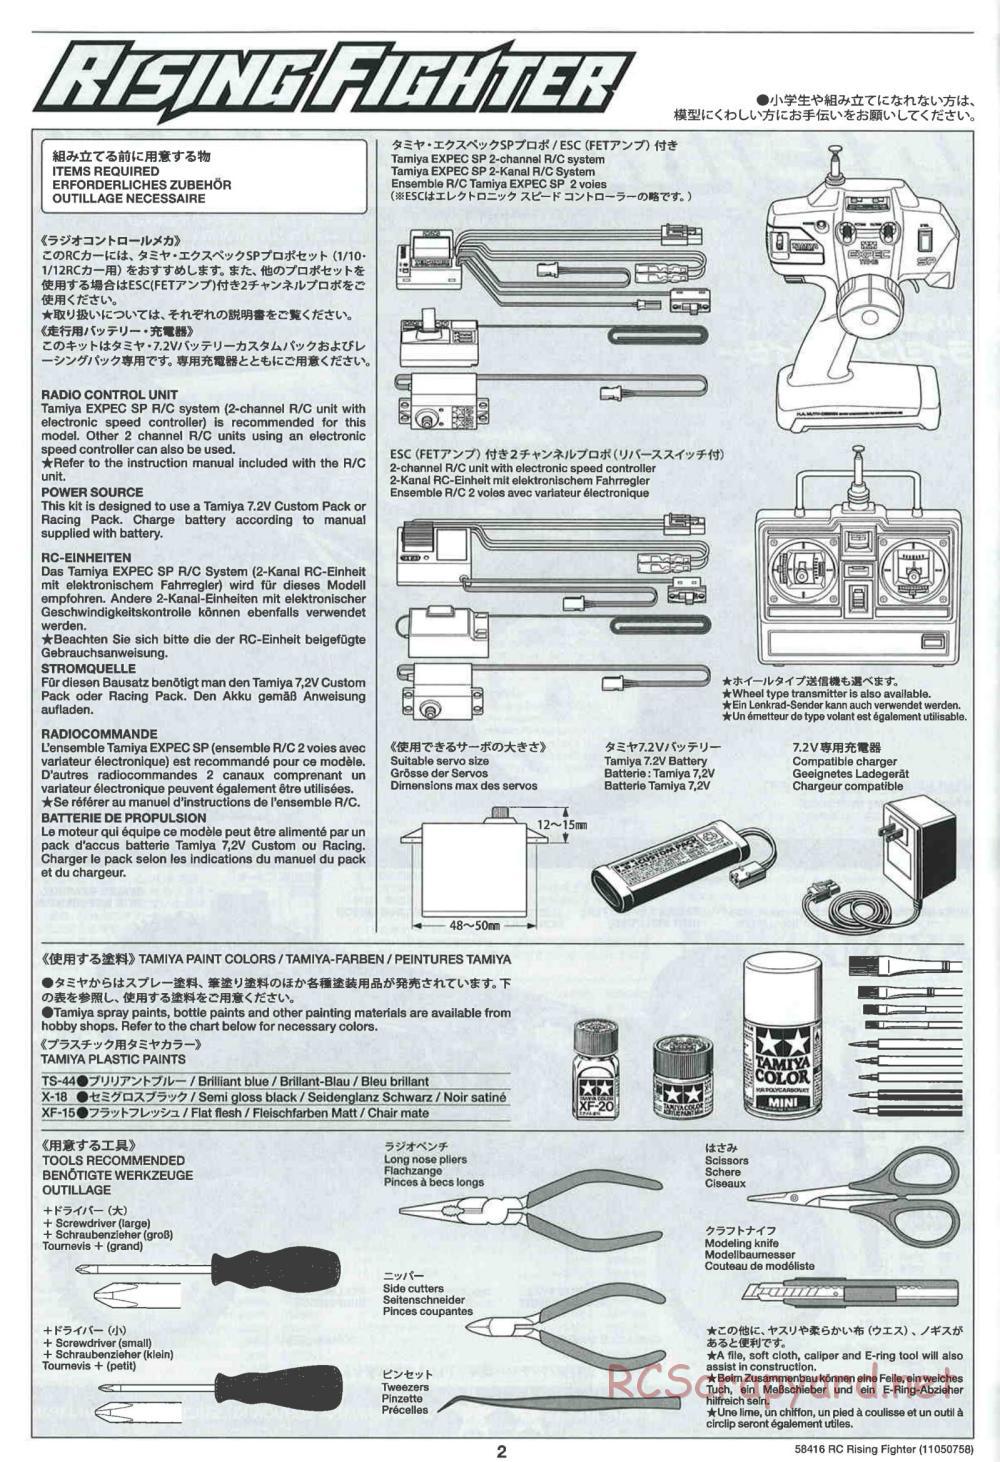 Tamiya - Rising Fighter Chassis - Manual - Page 2